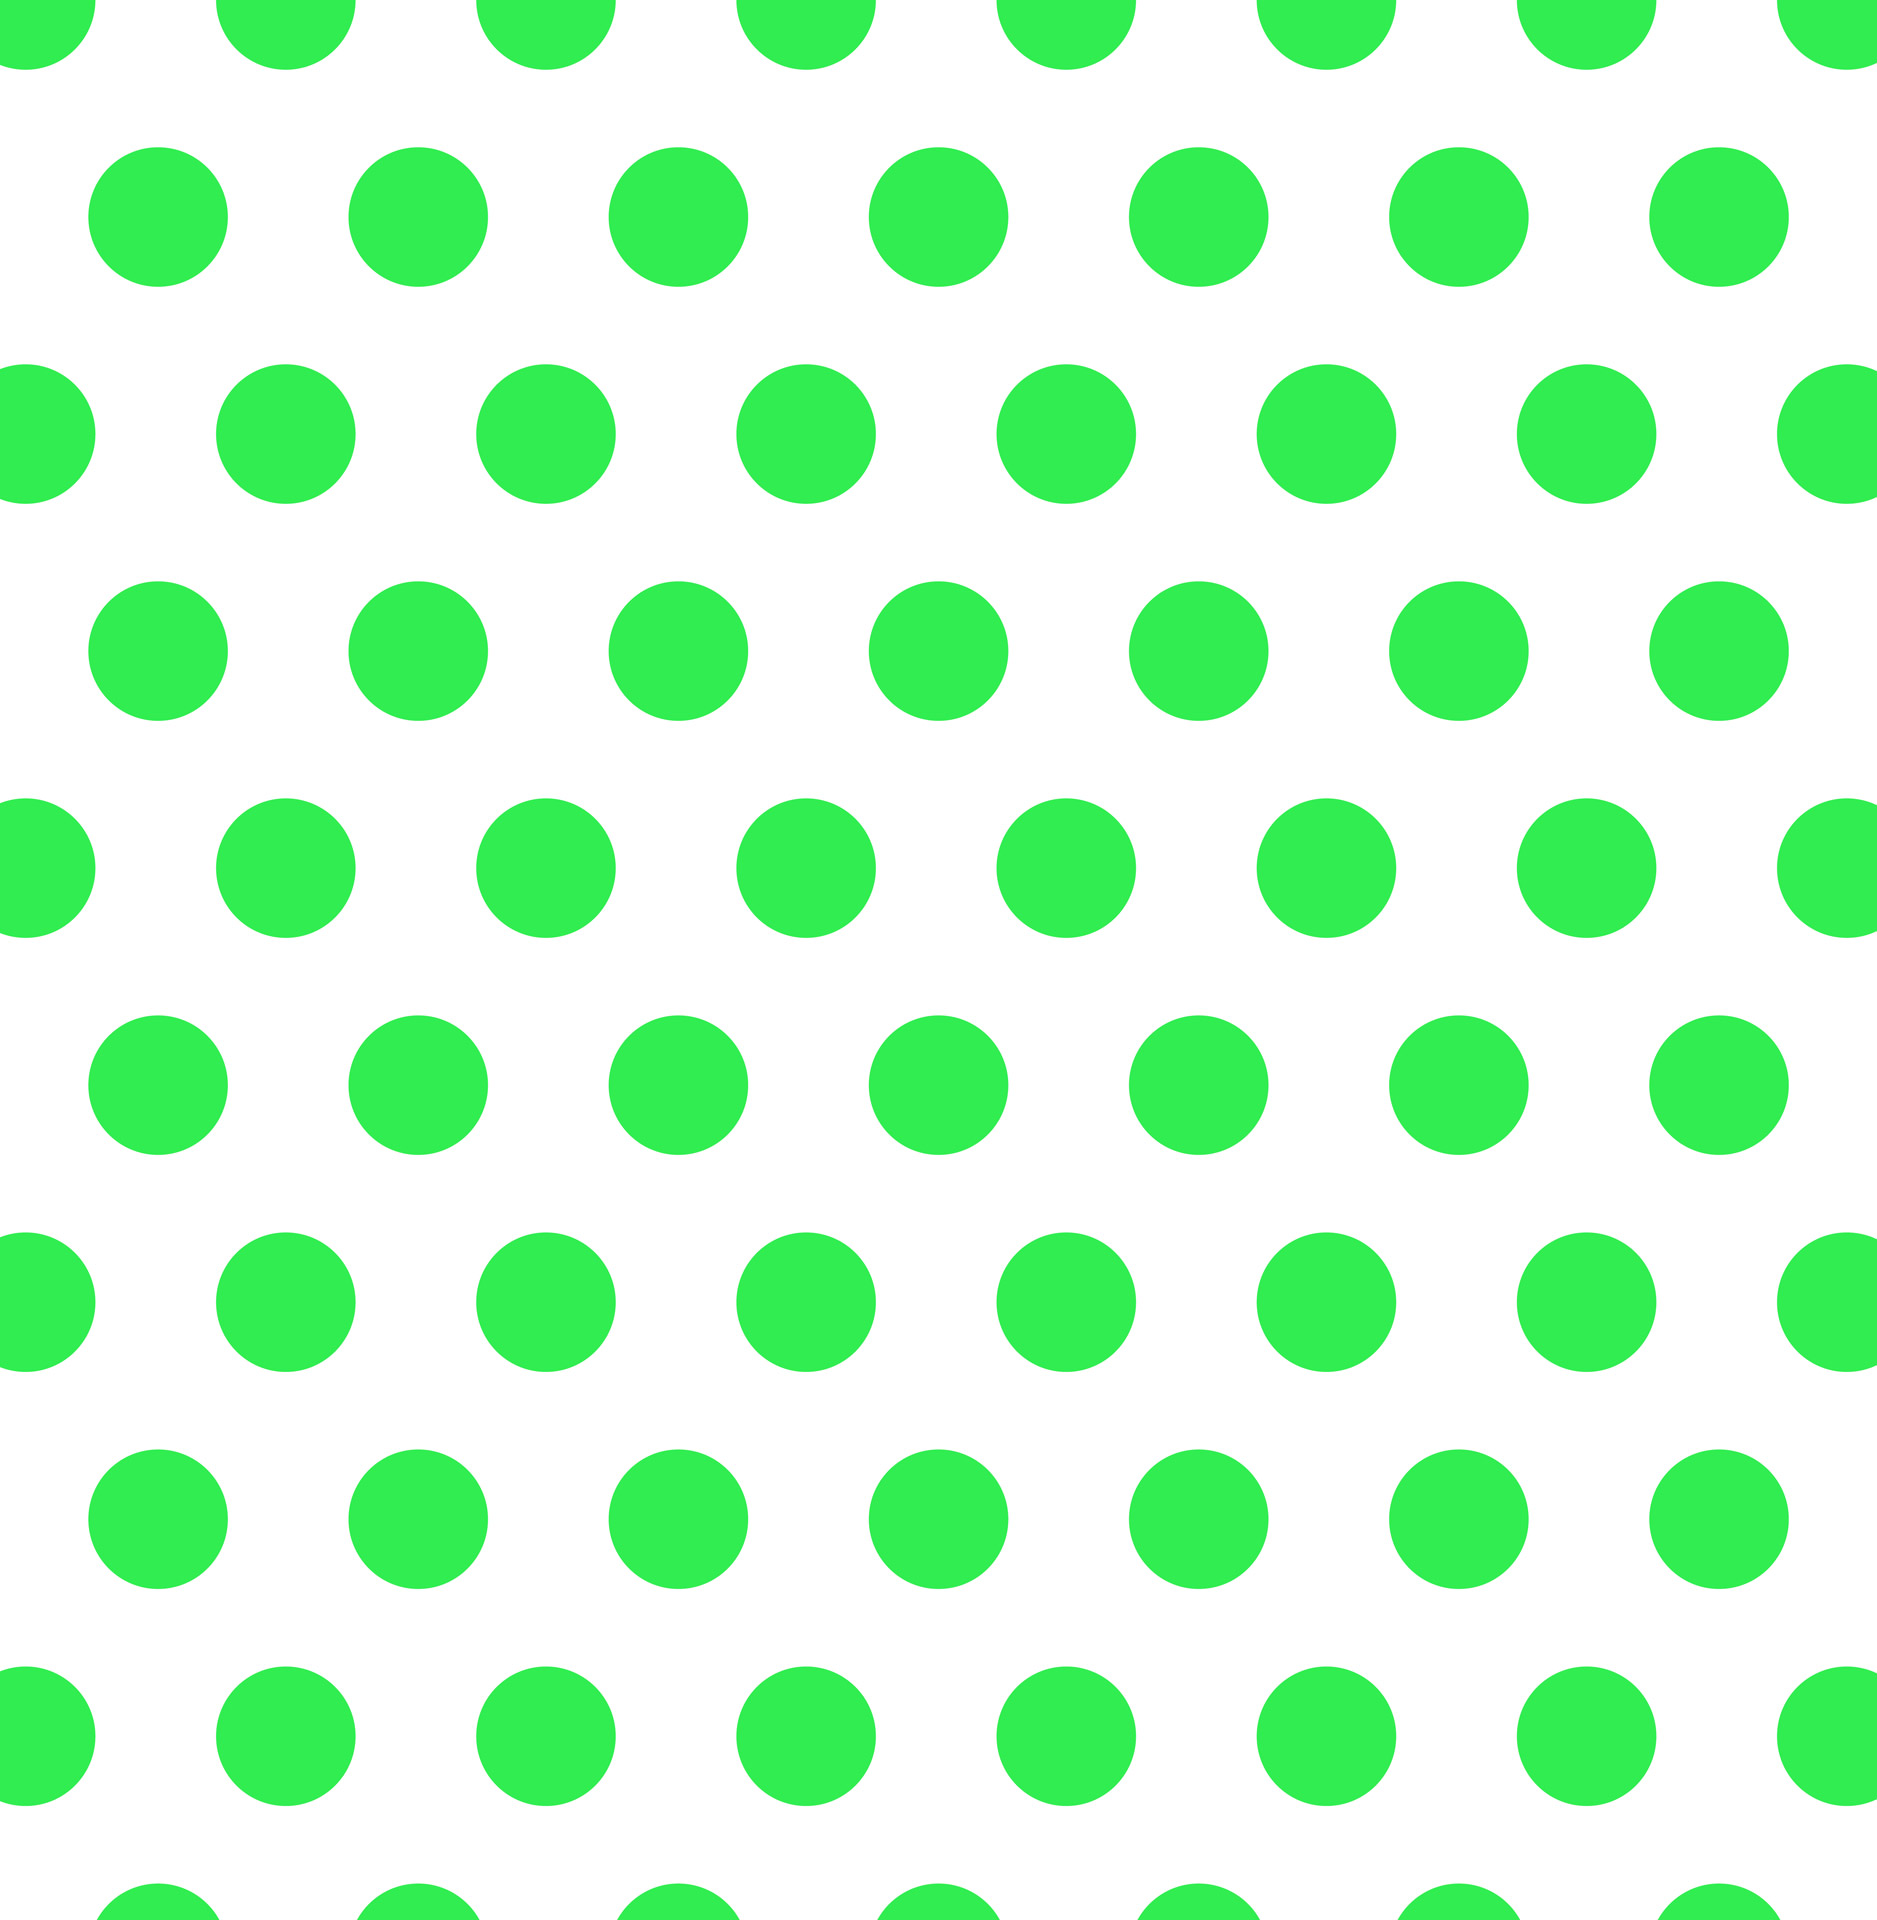 Green on Green Polka Dot Background - Green on Green Polka Dot